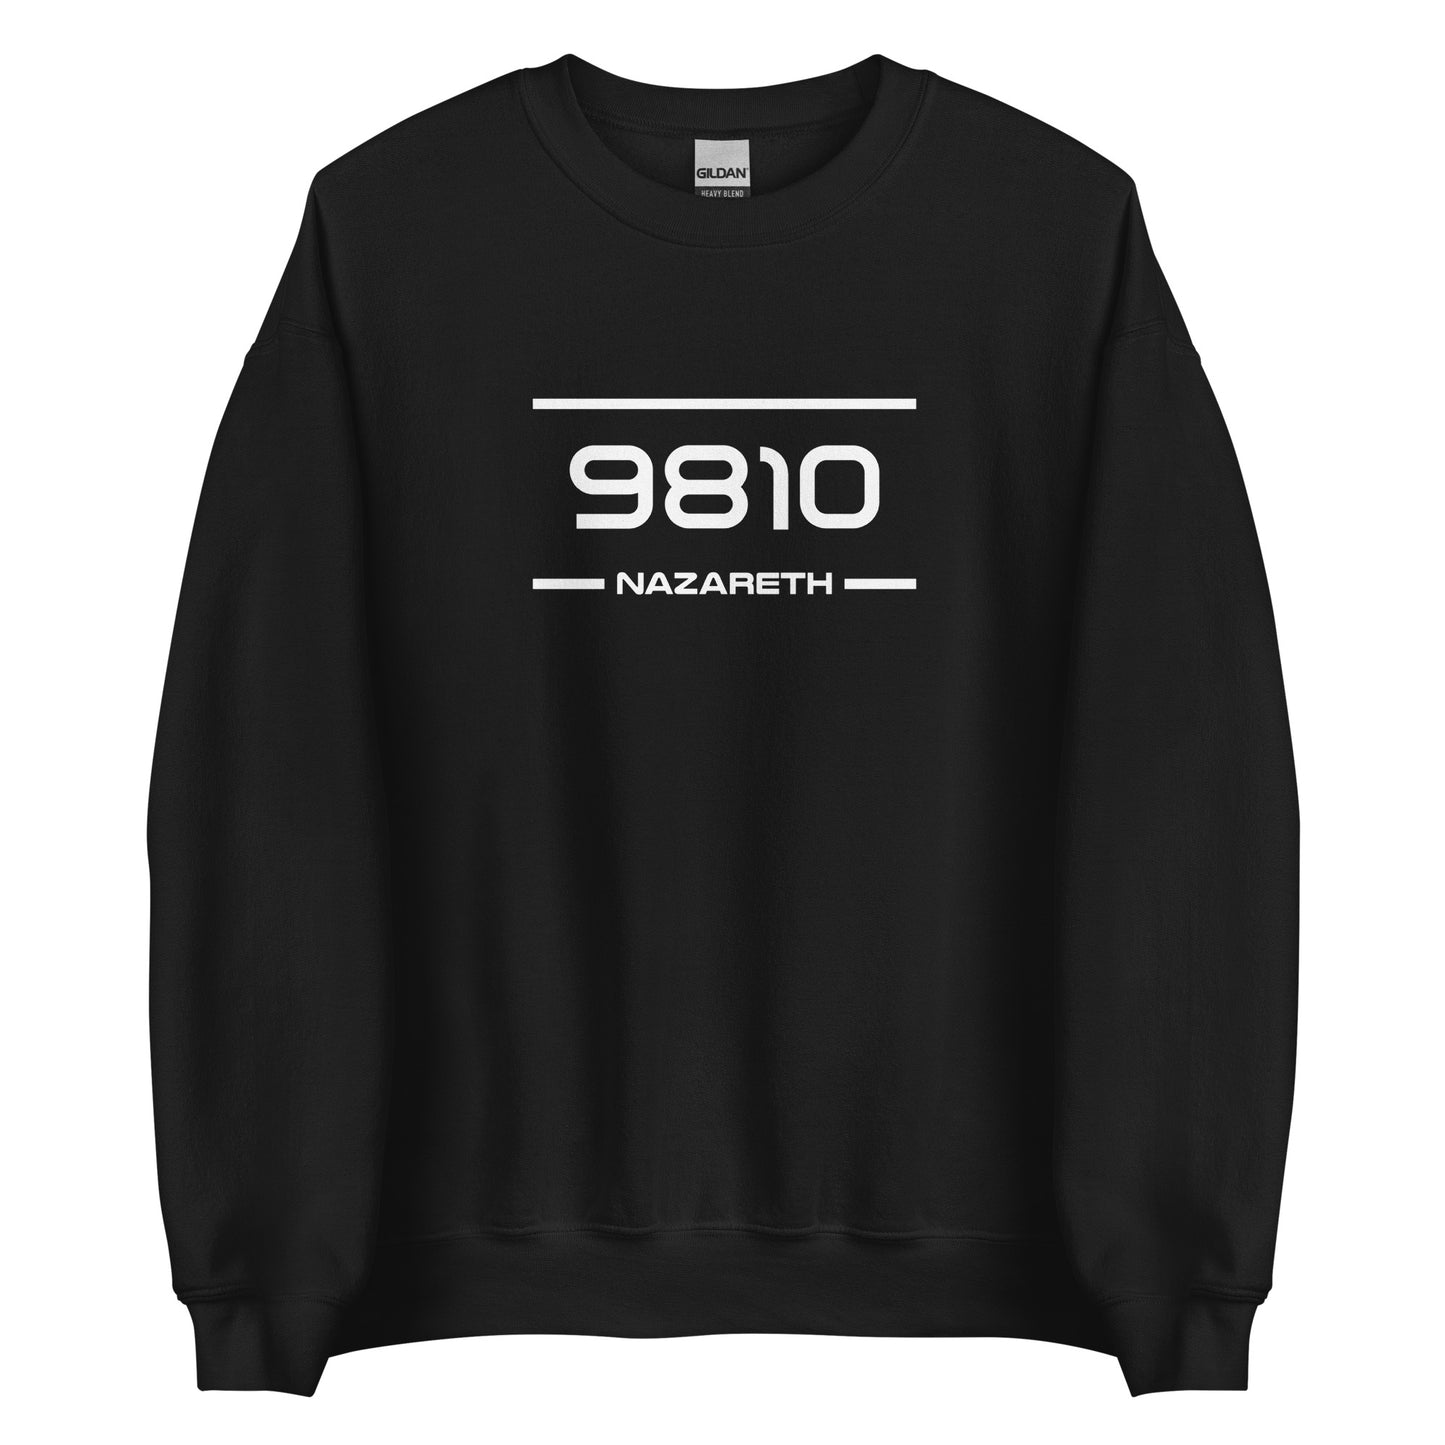 Sweater - 9810 - Nazareth (M/V)